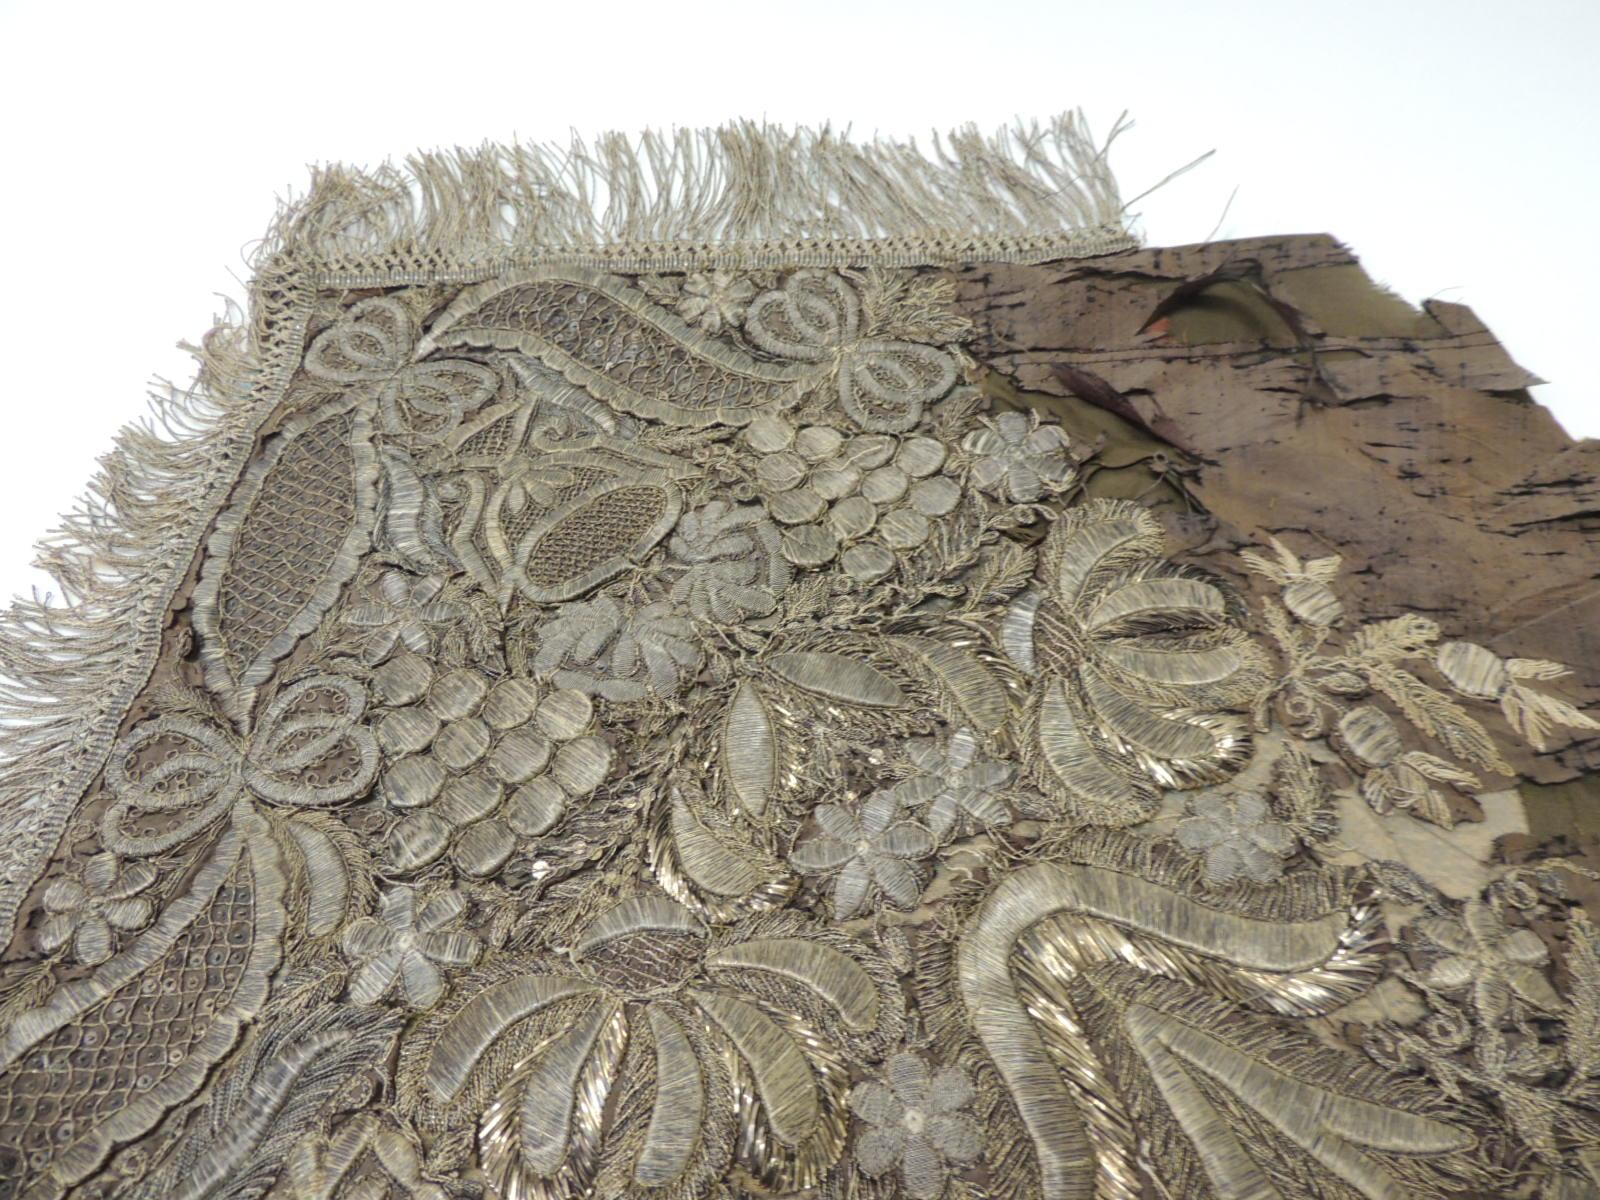 Armenian 18th Century Persian Ottoman Empire Heavy Gold Metallic Threads Textile